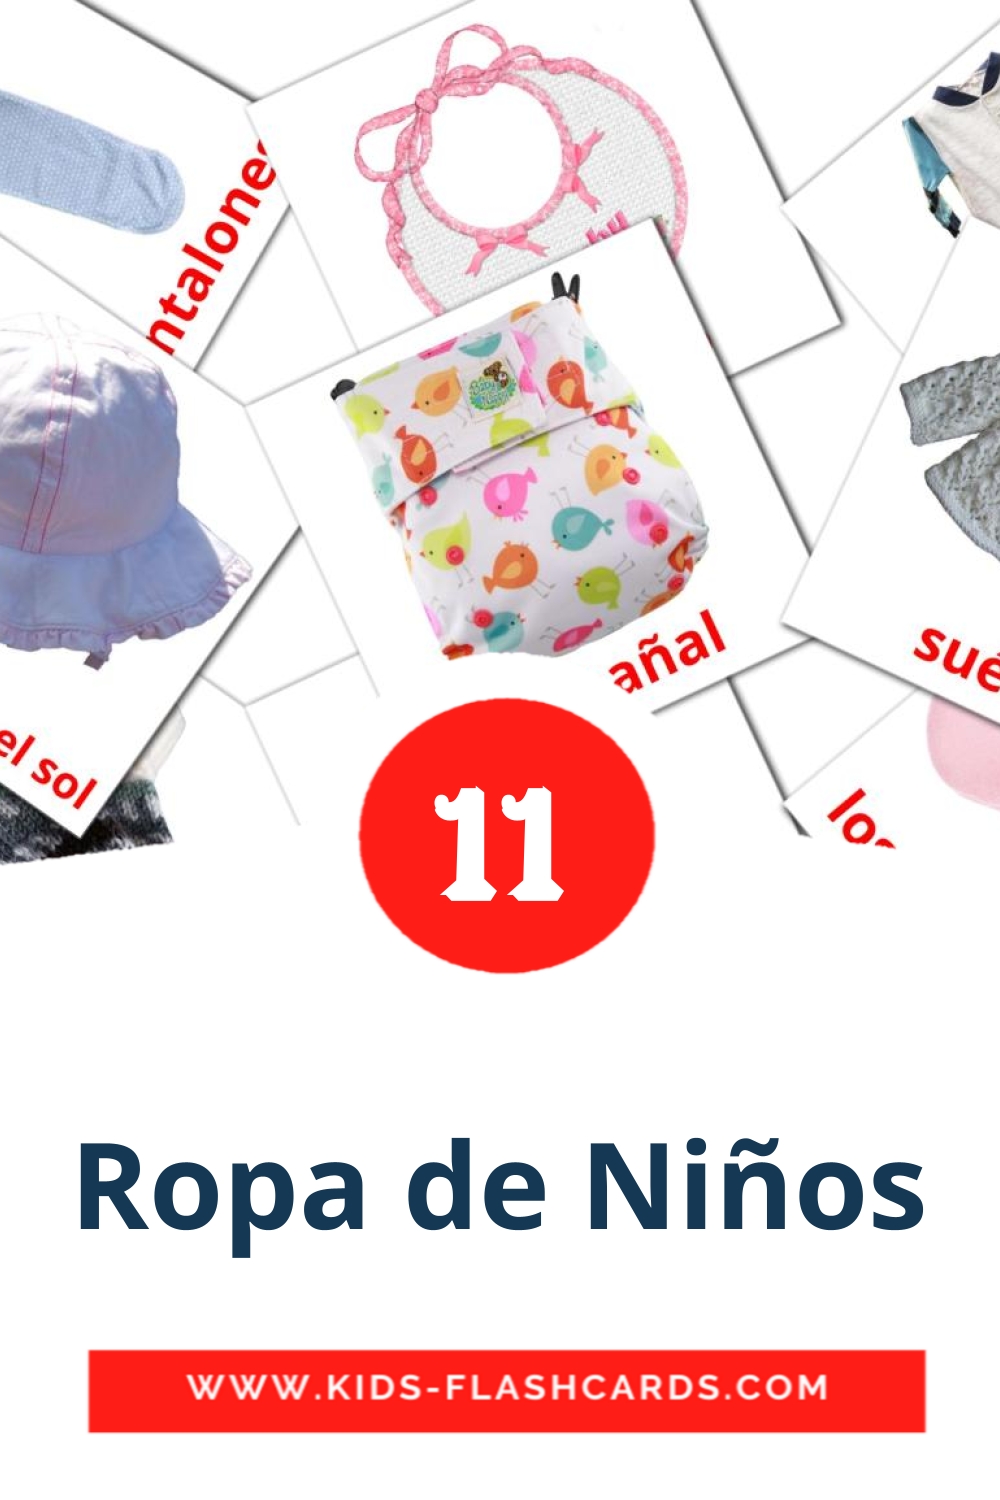 12 Ropa de Niños Picture Cards for Kindergarden in spanish